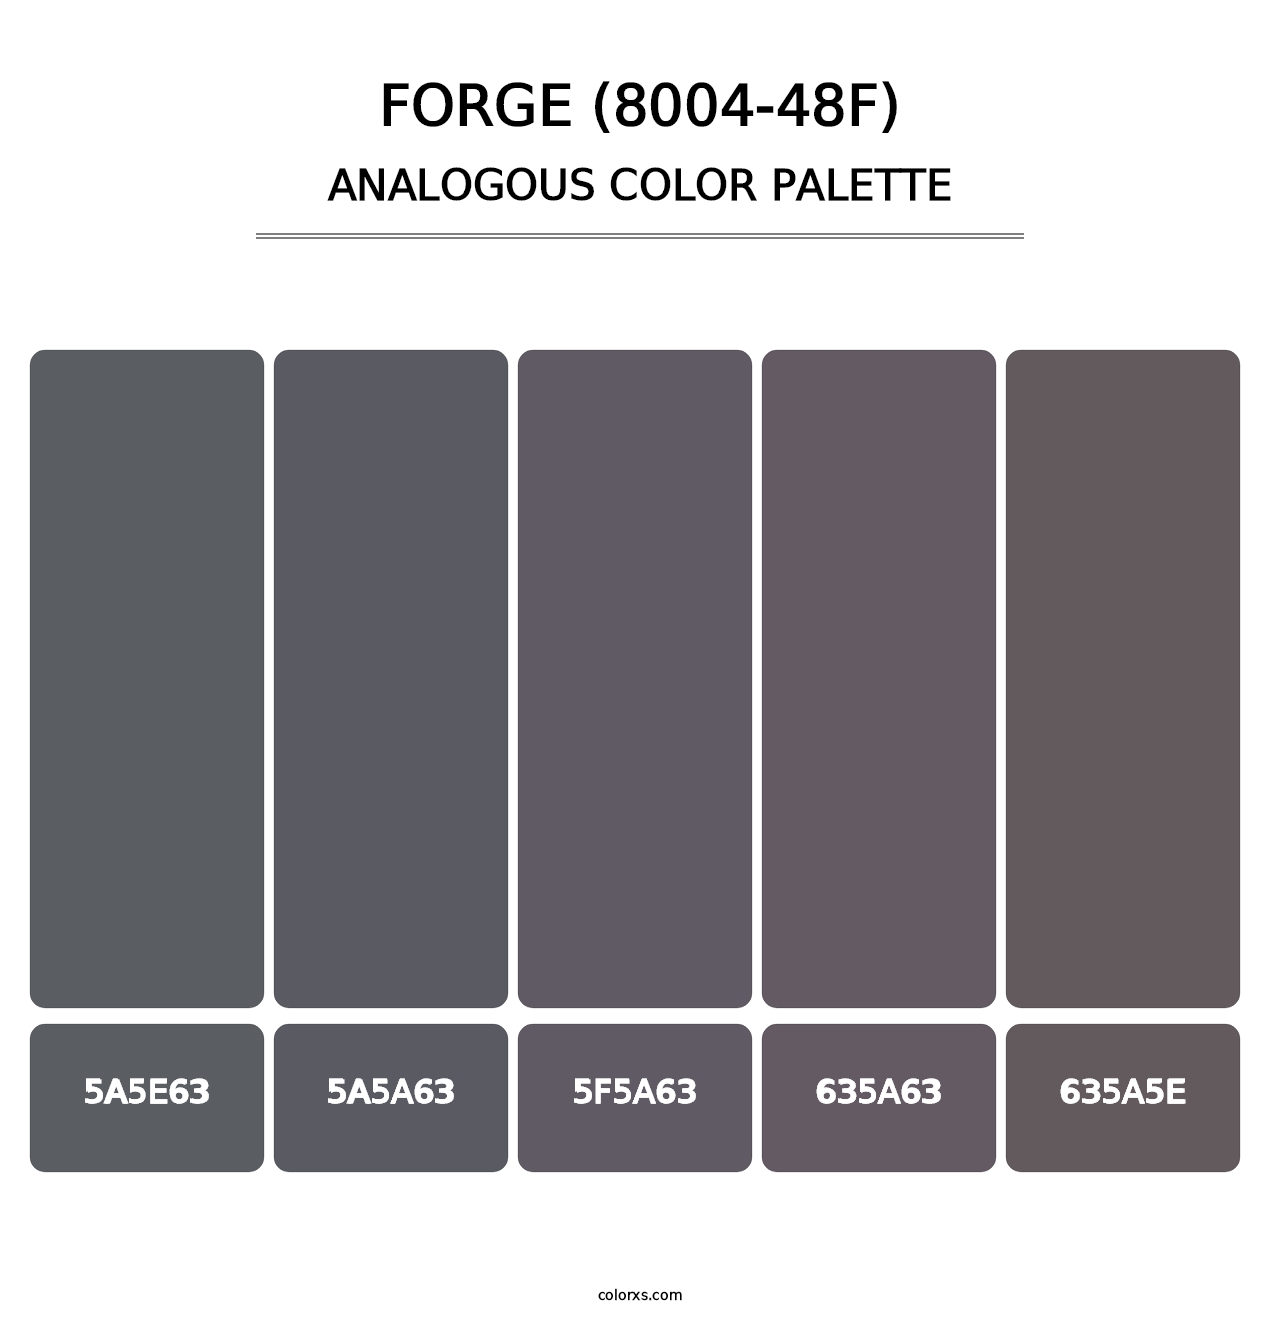 Forge (8004-48F) - Analogous Color Palette